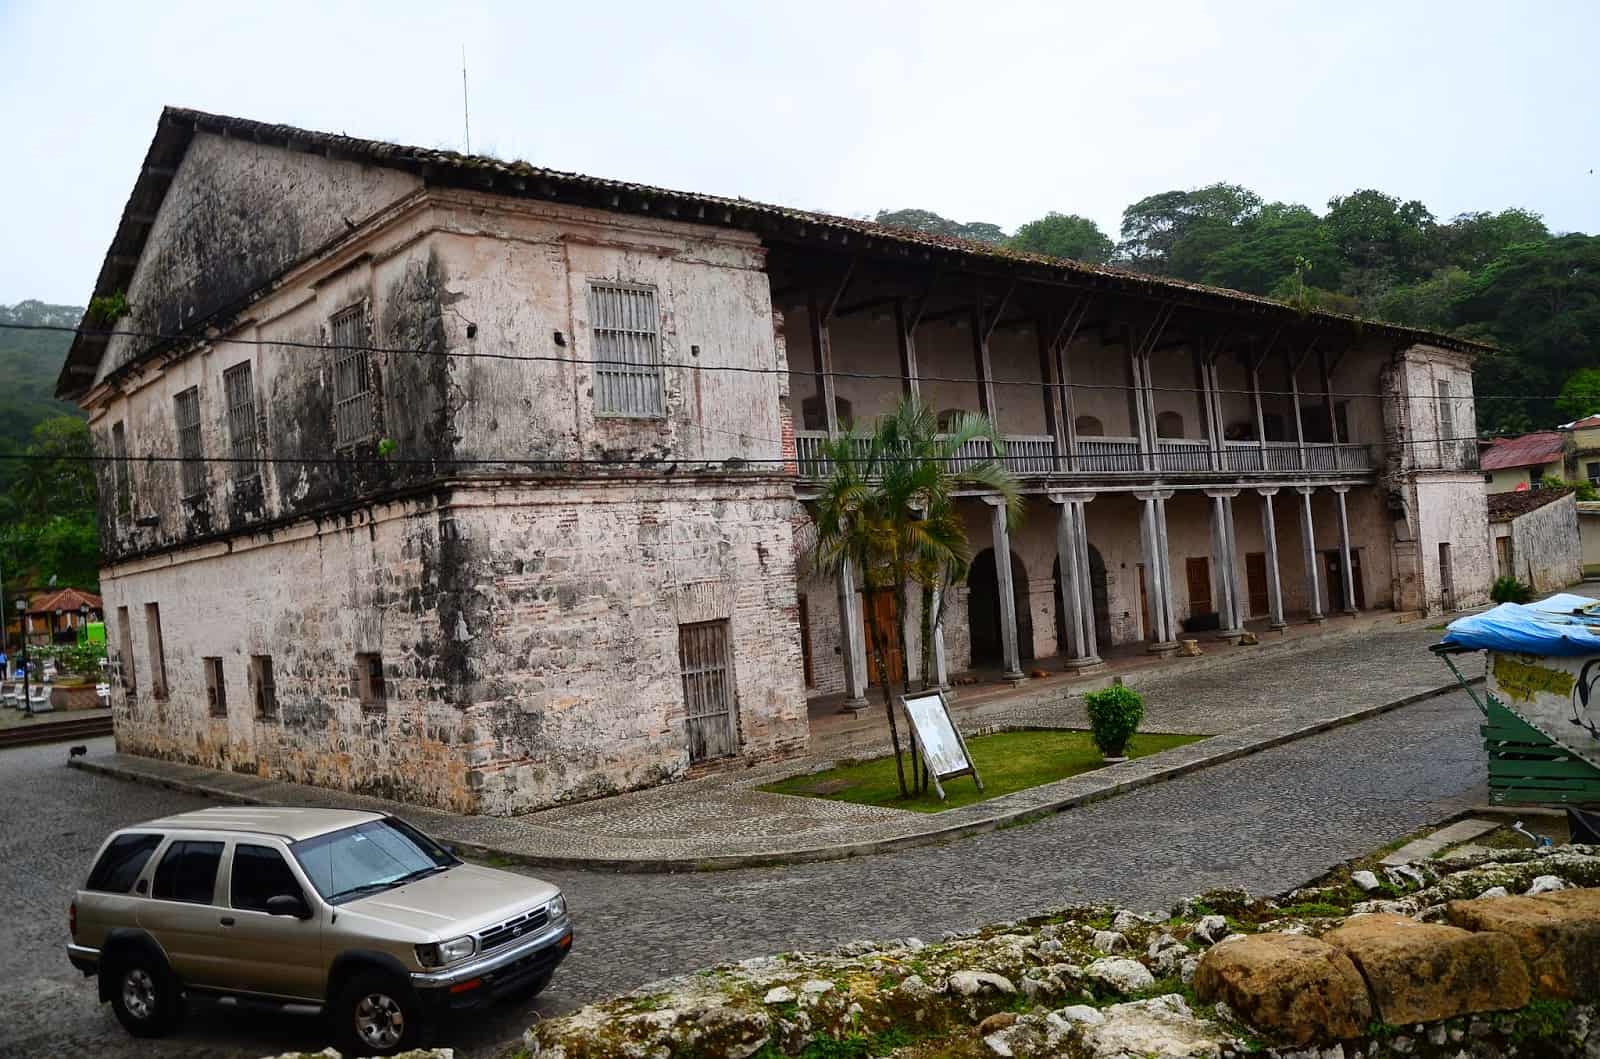 Real Aduana in Portobelo, Panama